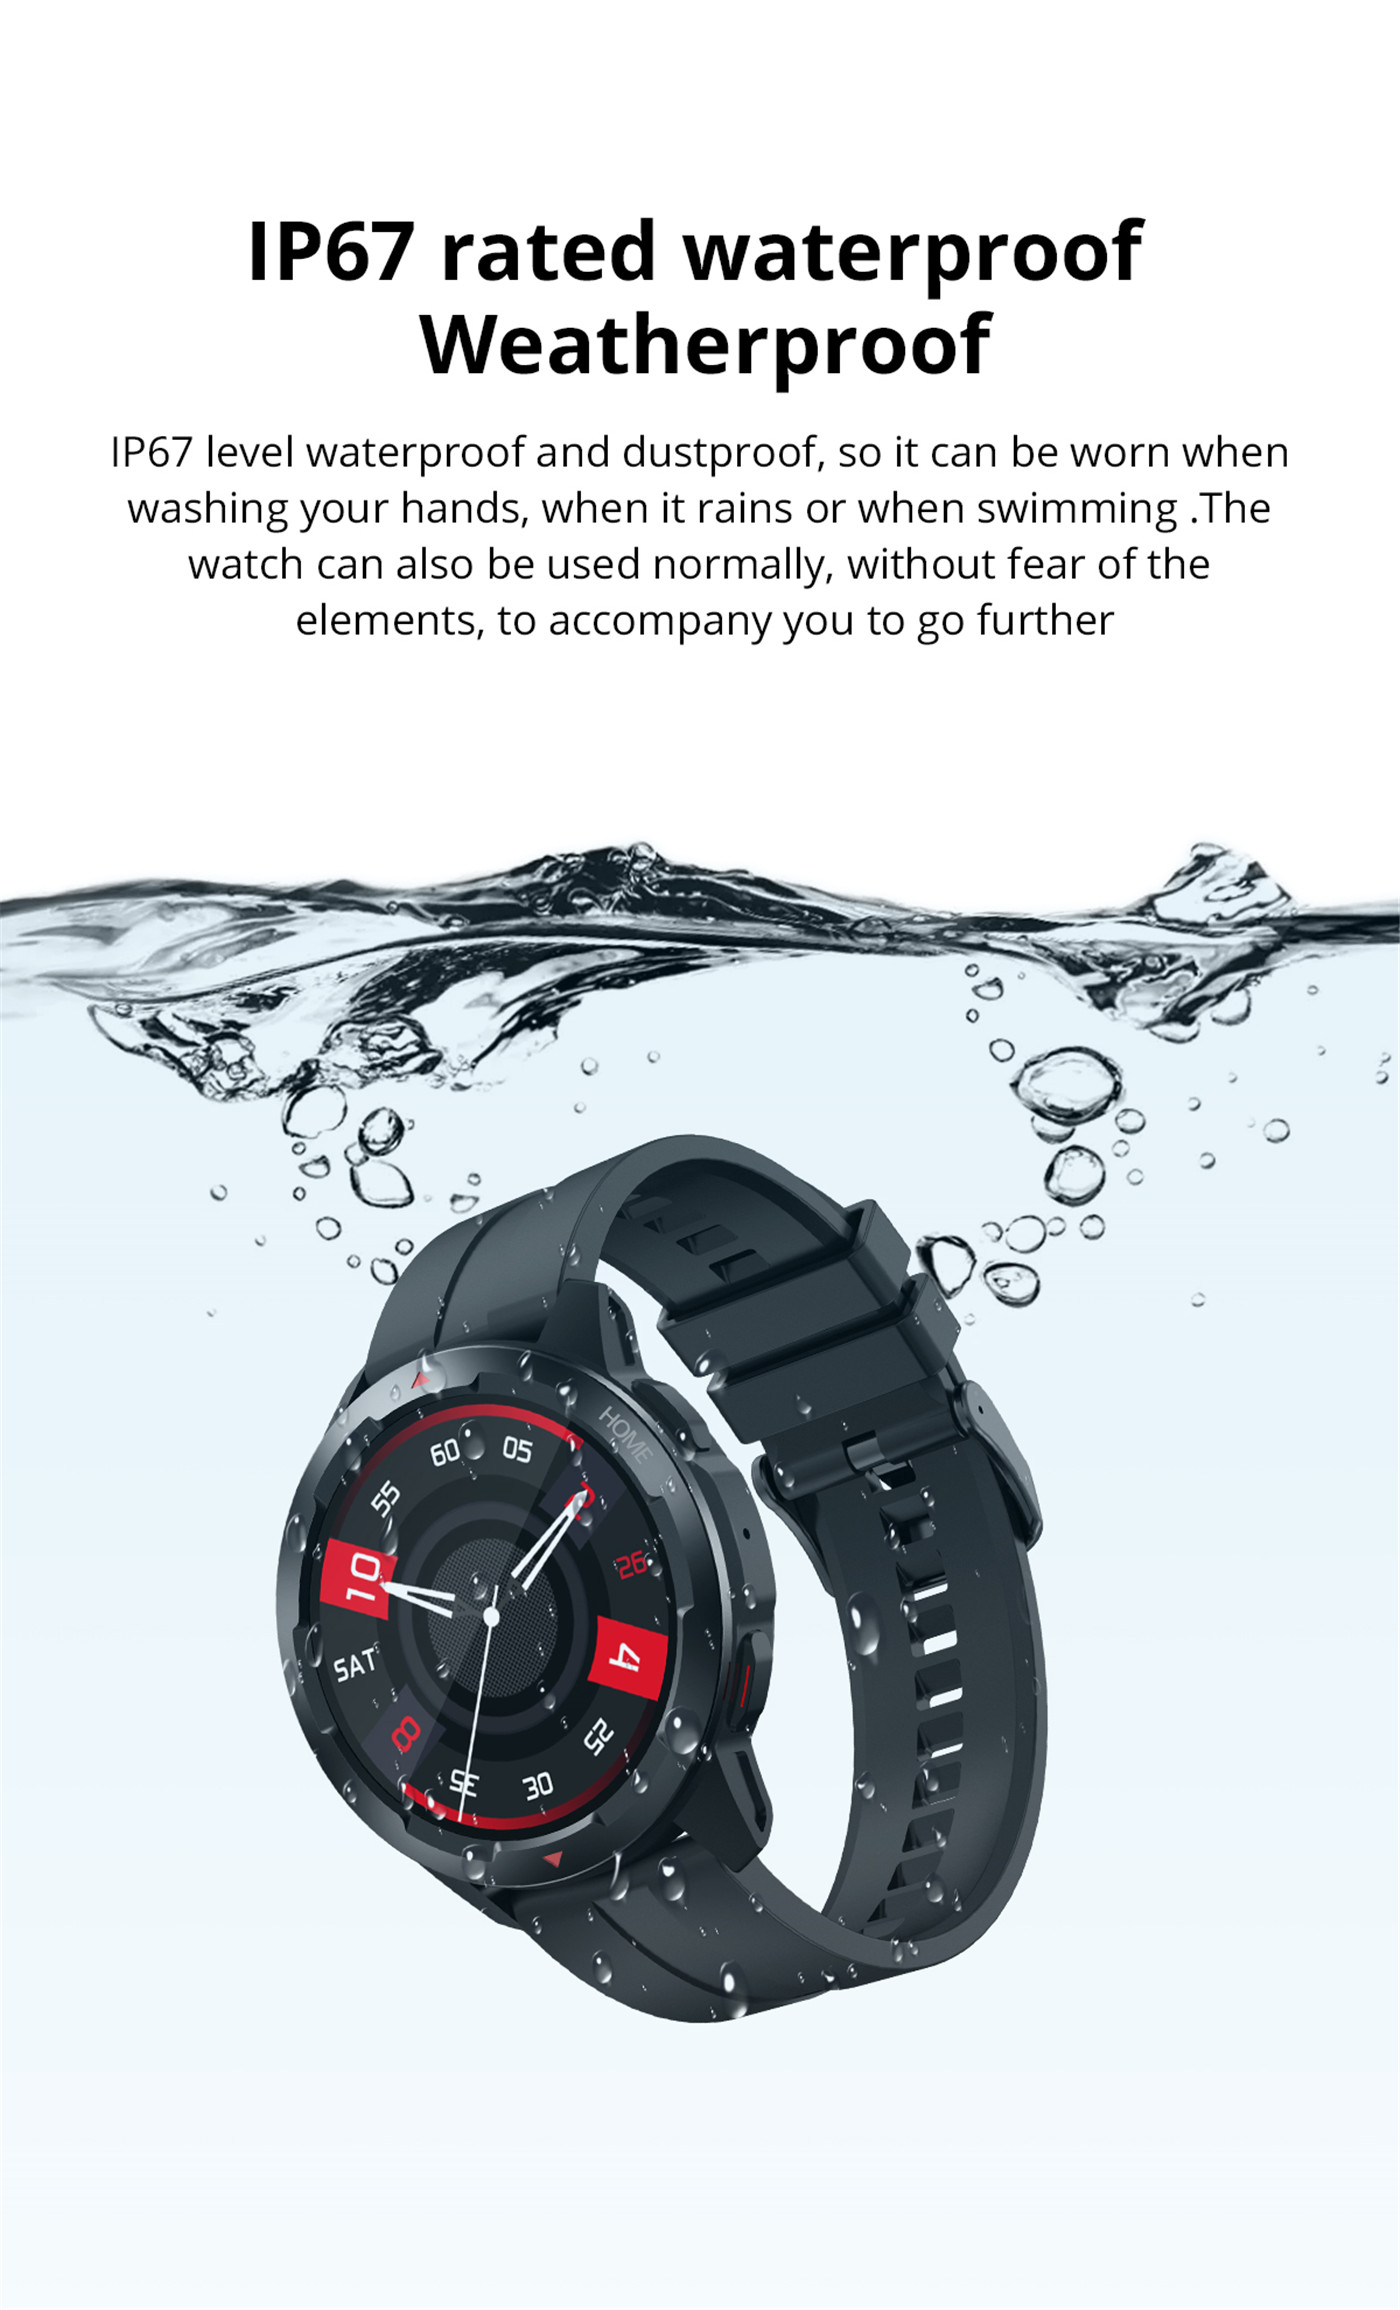 COLMI M40 Smartwatch мардон 1.32 дюйм 360360 HD экрани занги Smart Watch занон IP67 обногузар (10)